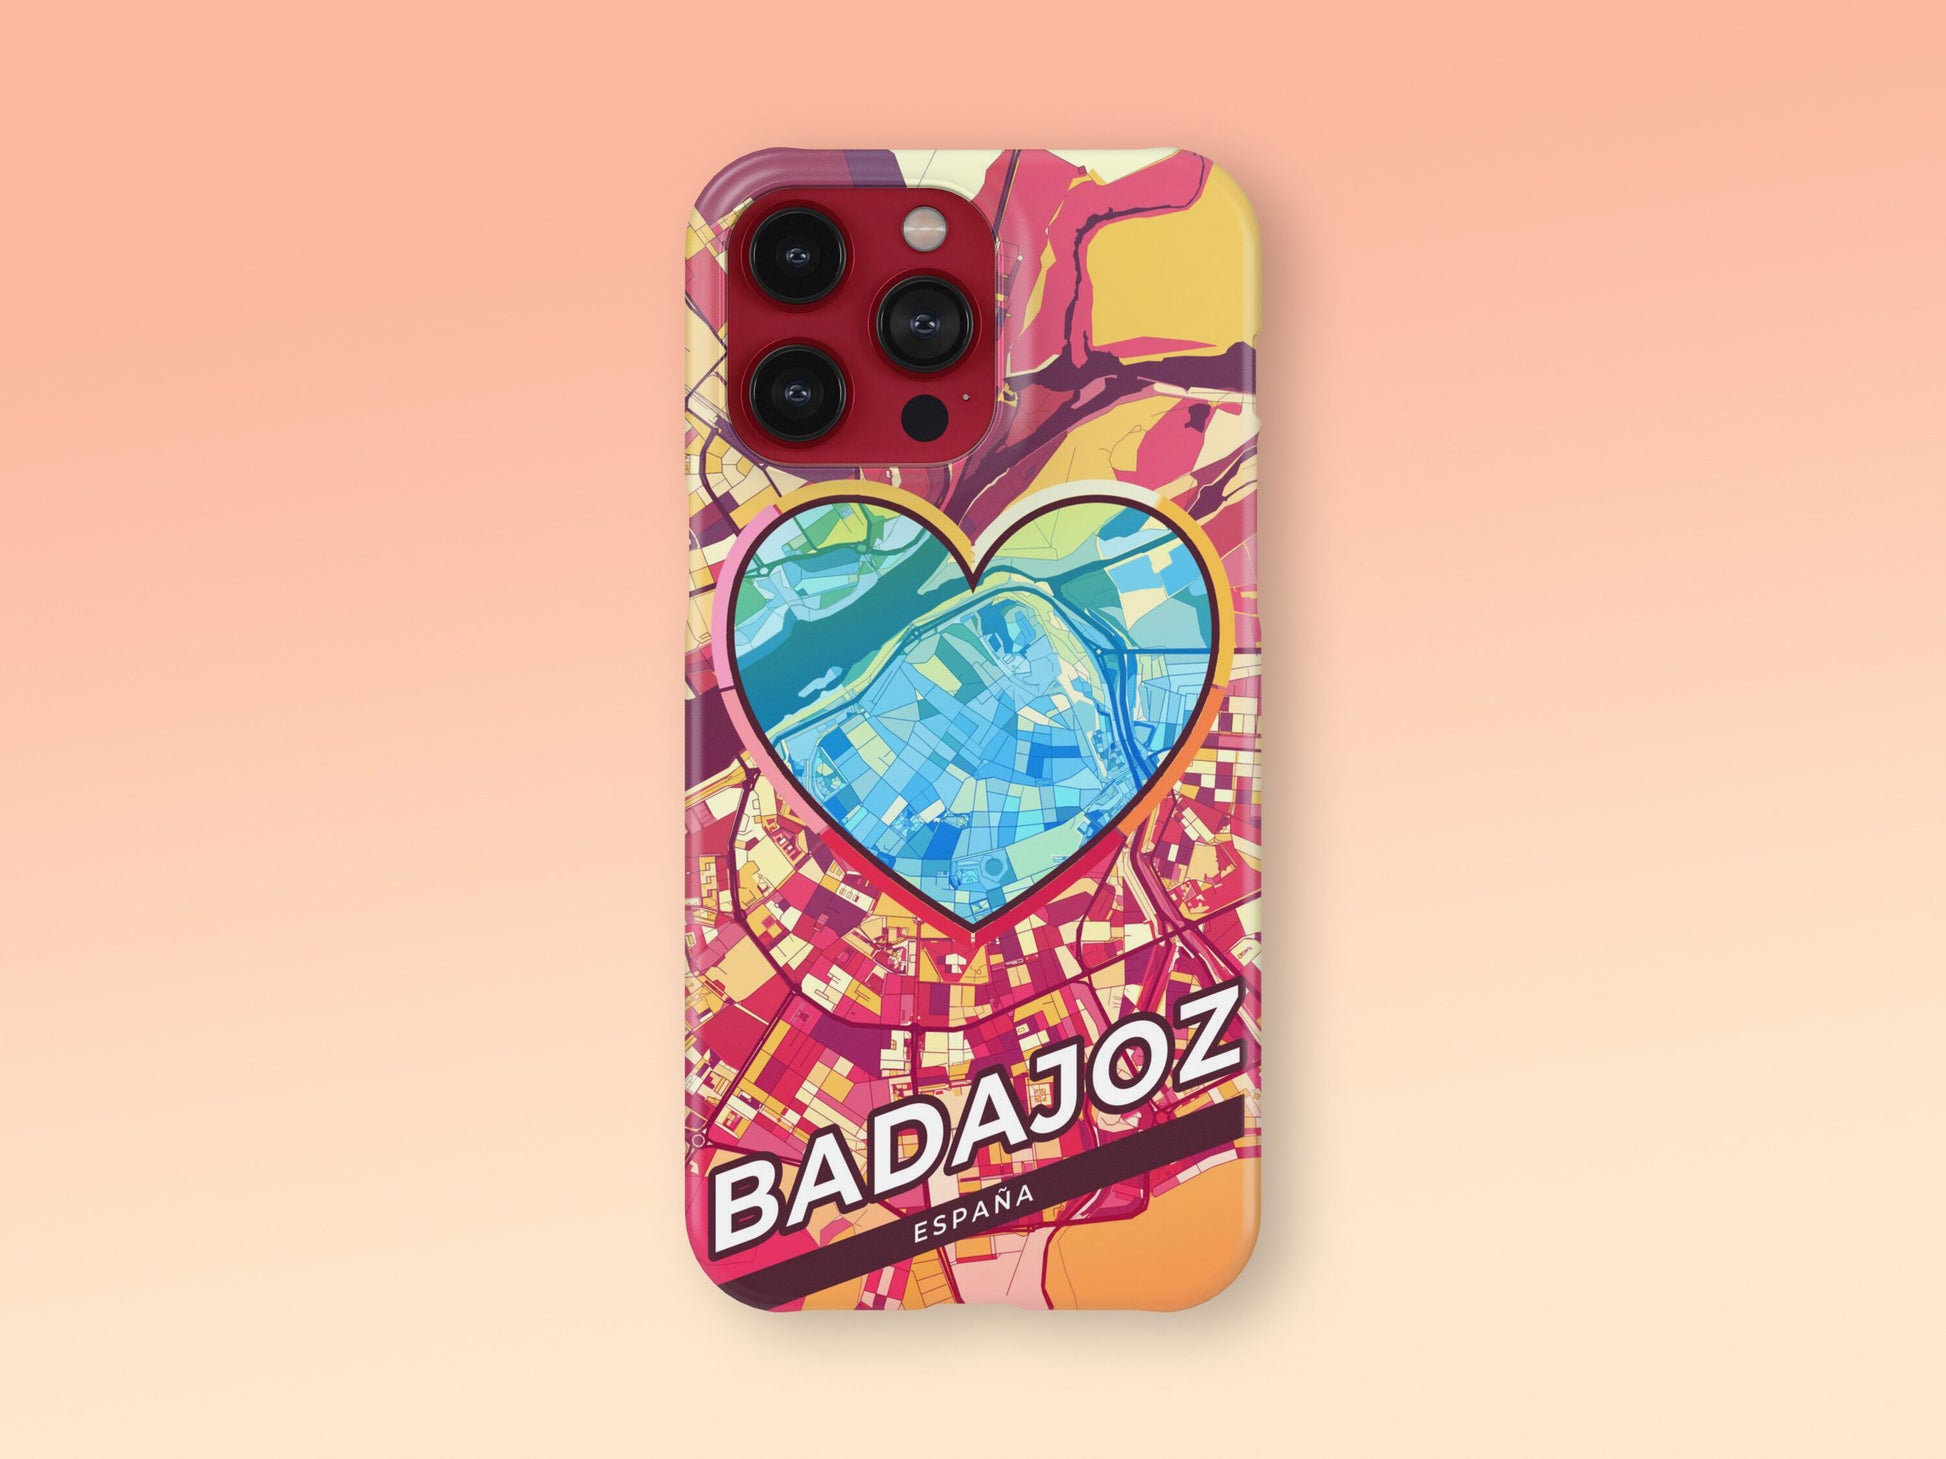 Badajoz Spain slim phone case with colorful icon. Birthday, wedding or housewarming gift. Couple match cases. 2